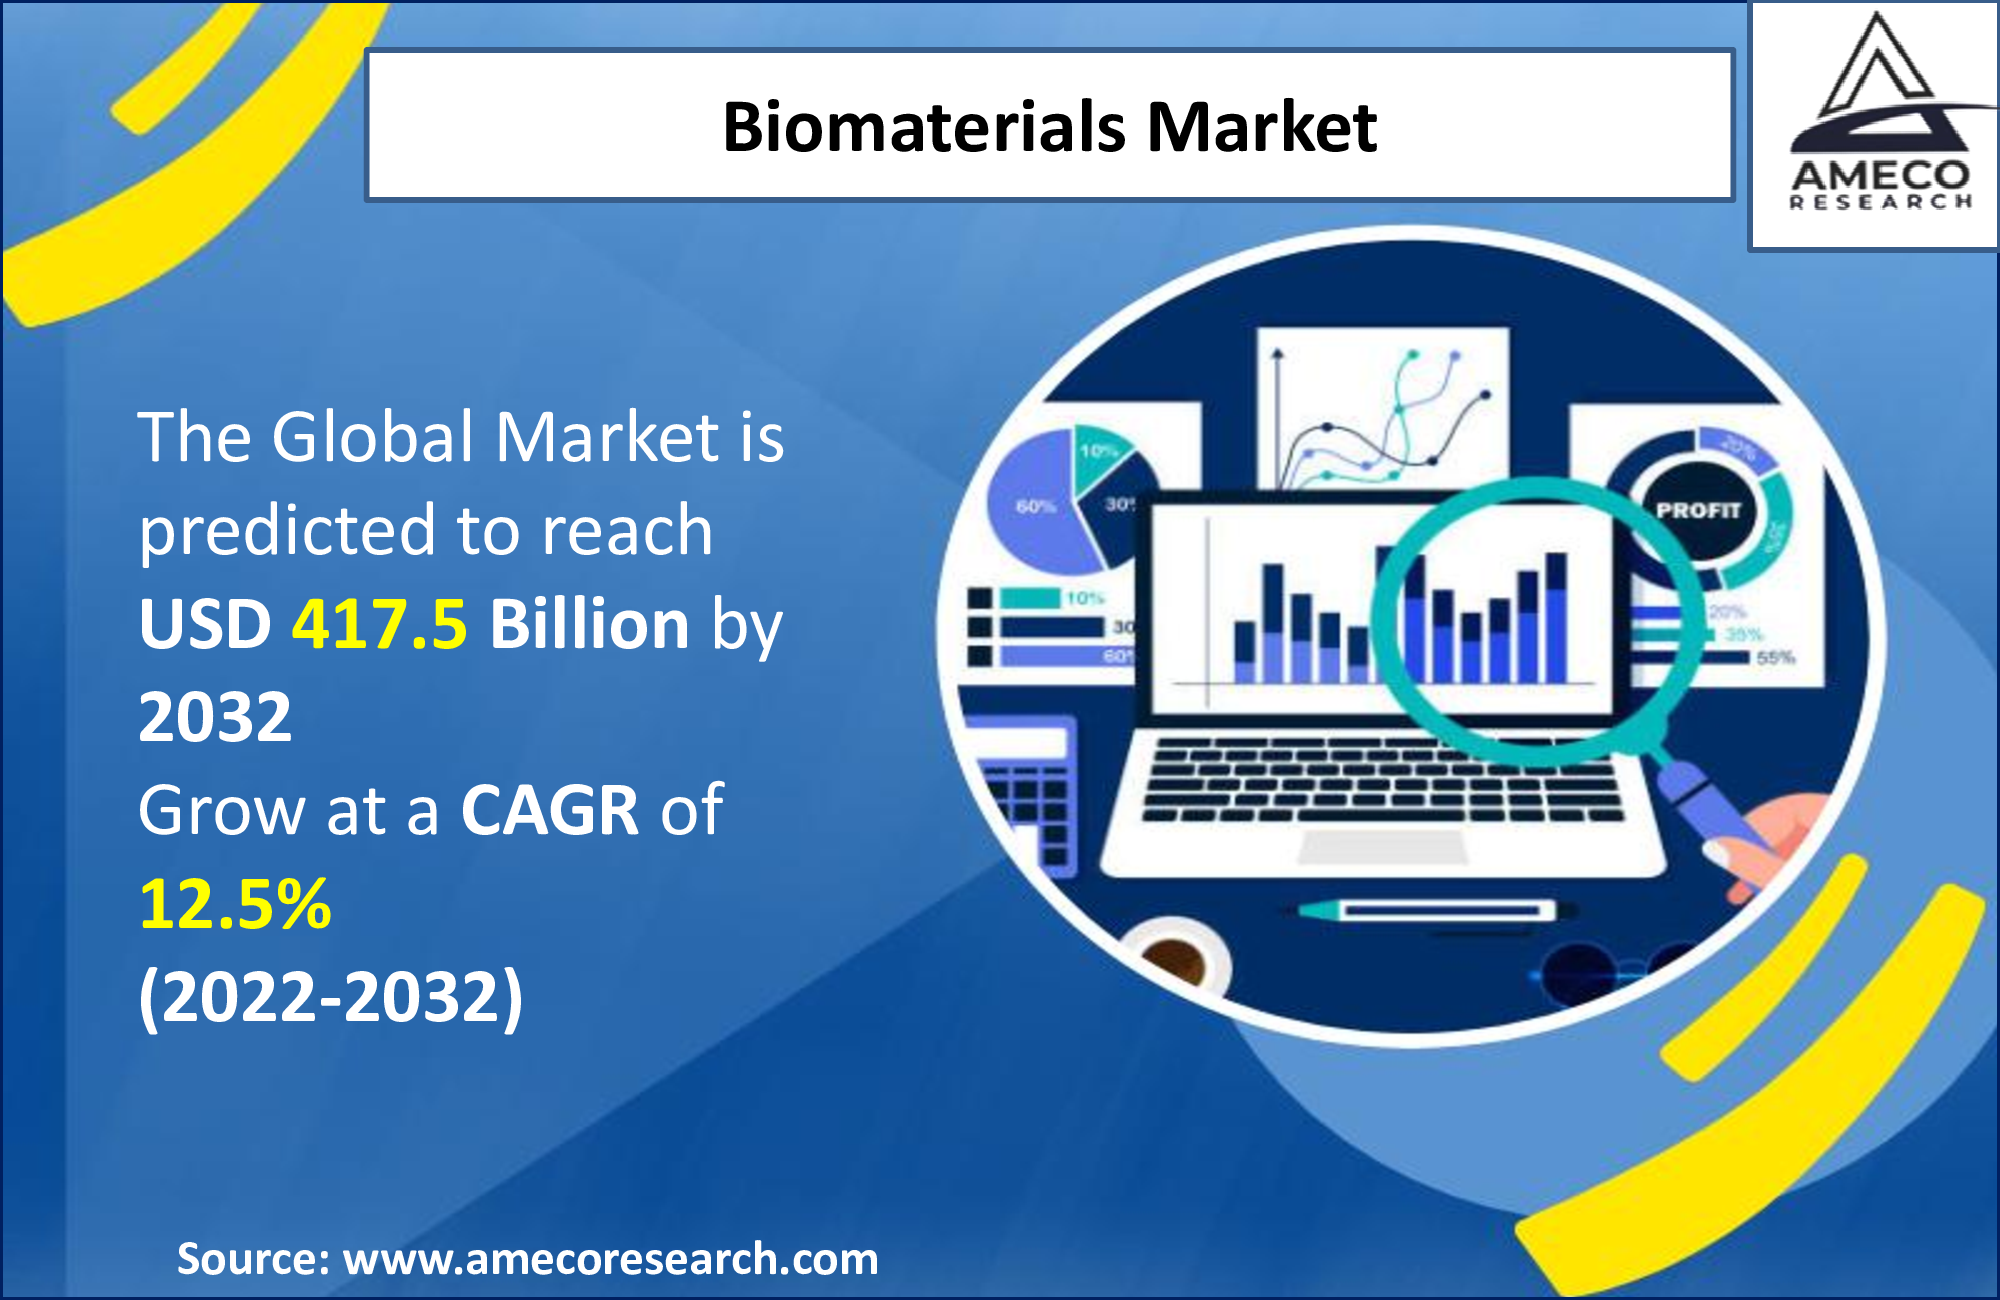 Biomaterials Market